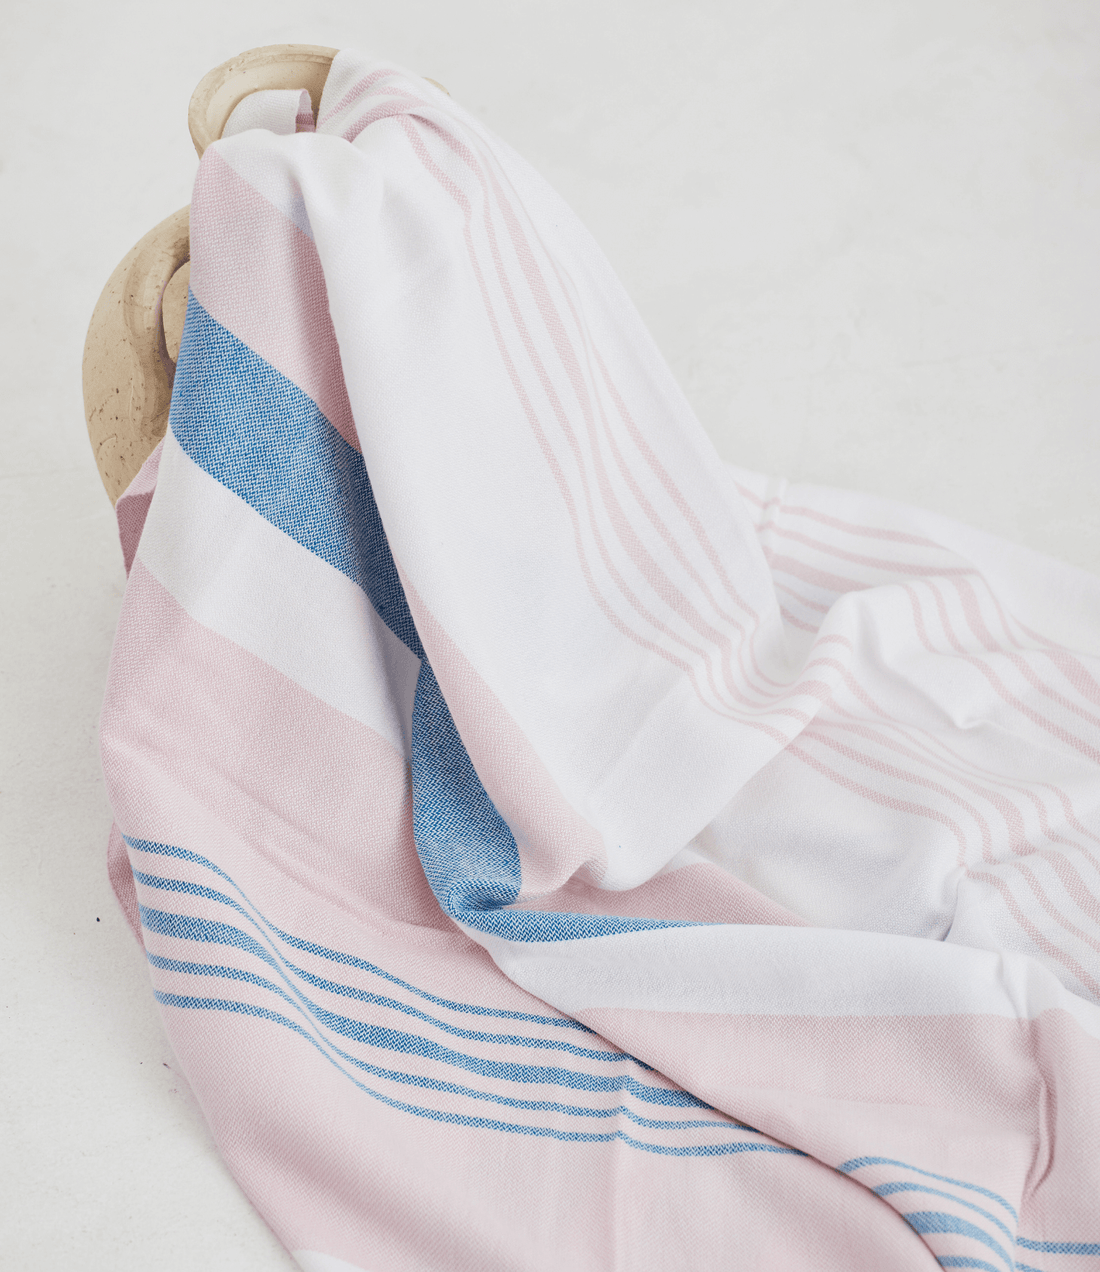 A lightweight peshtemal towel in light pink and blue